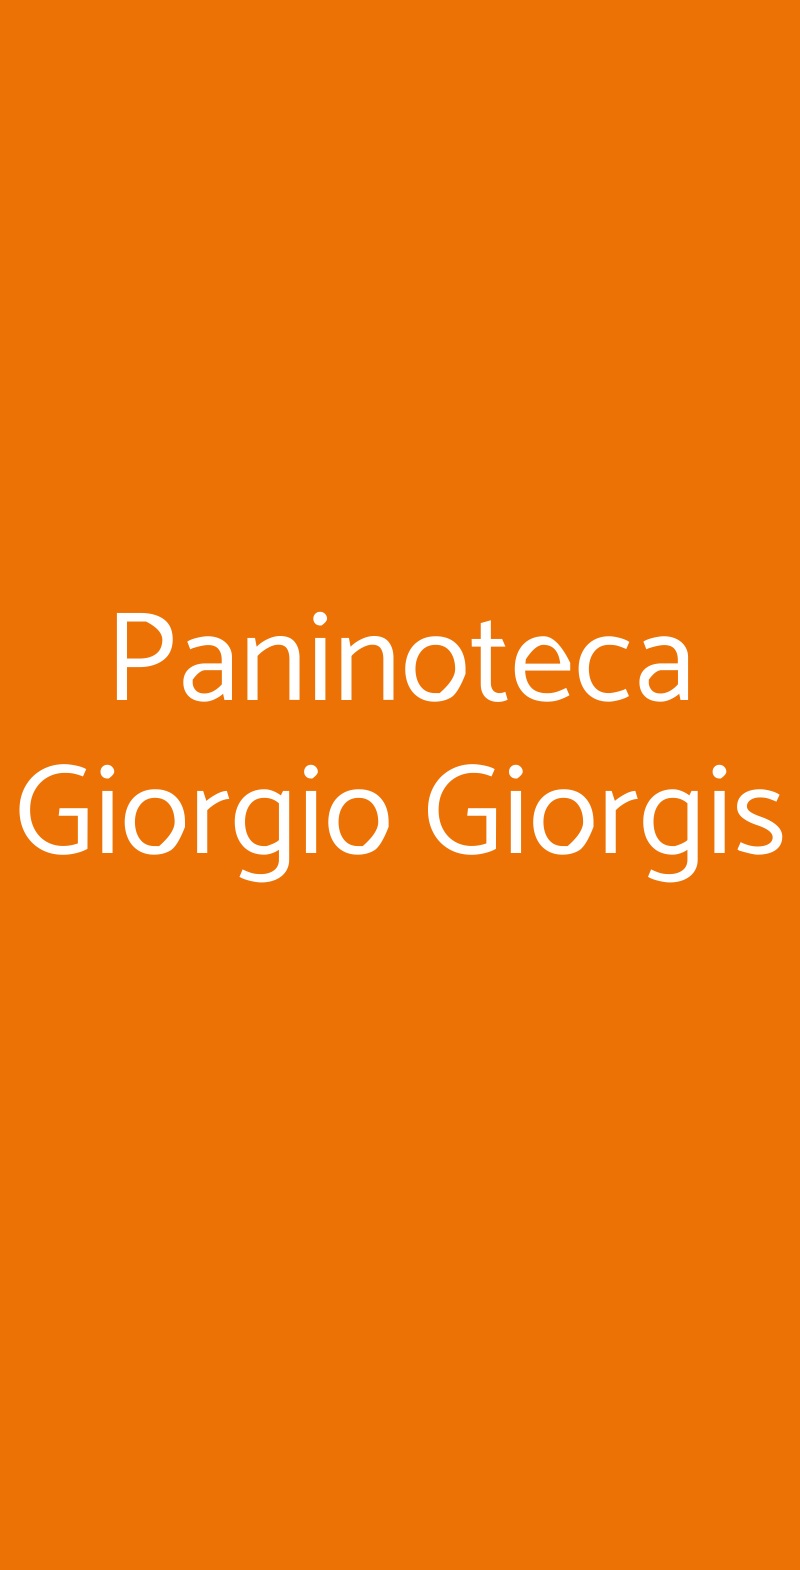 Paninoteca Giorgio Giorgis Fiumicino menù 1 pagina